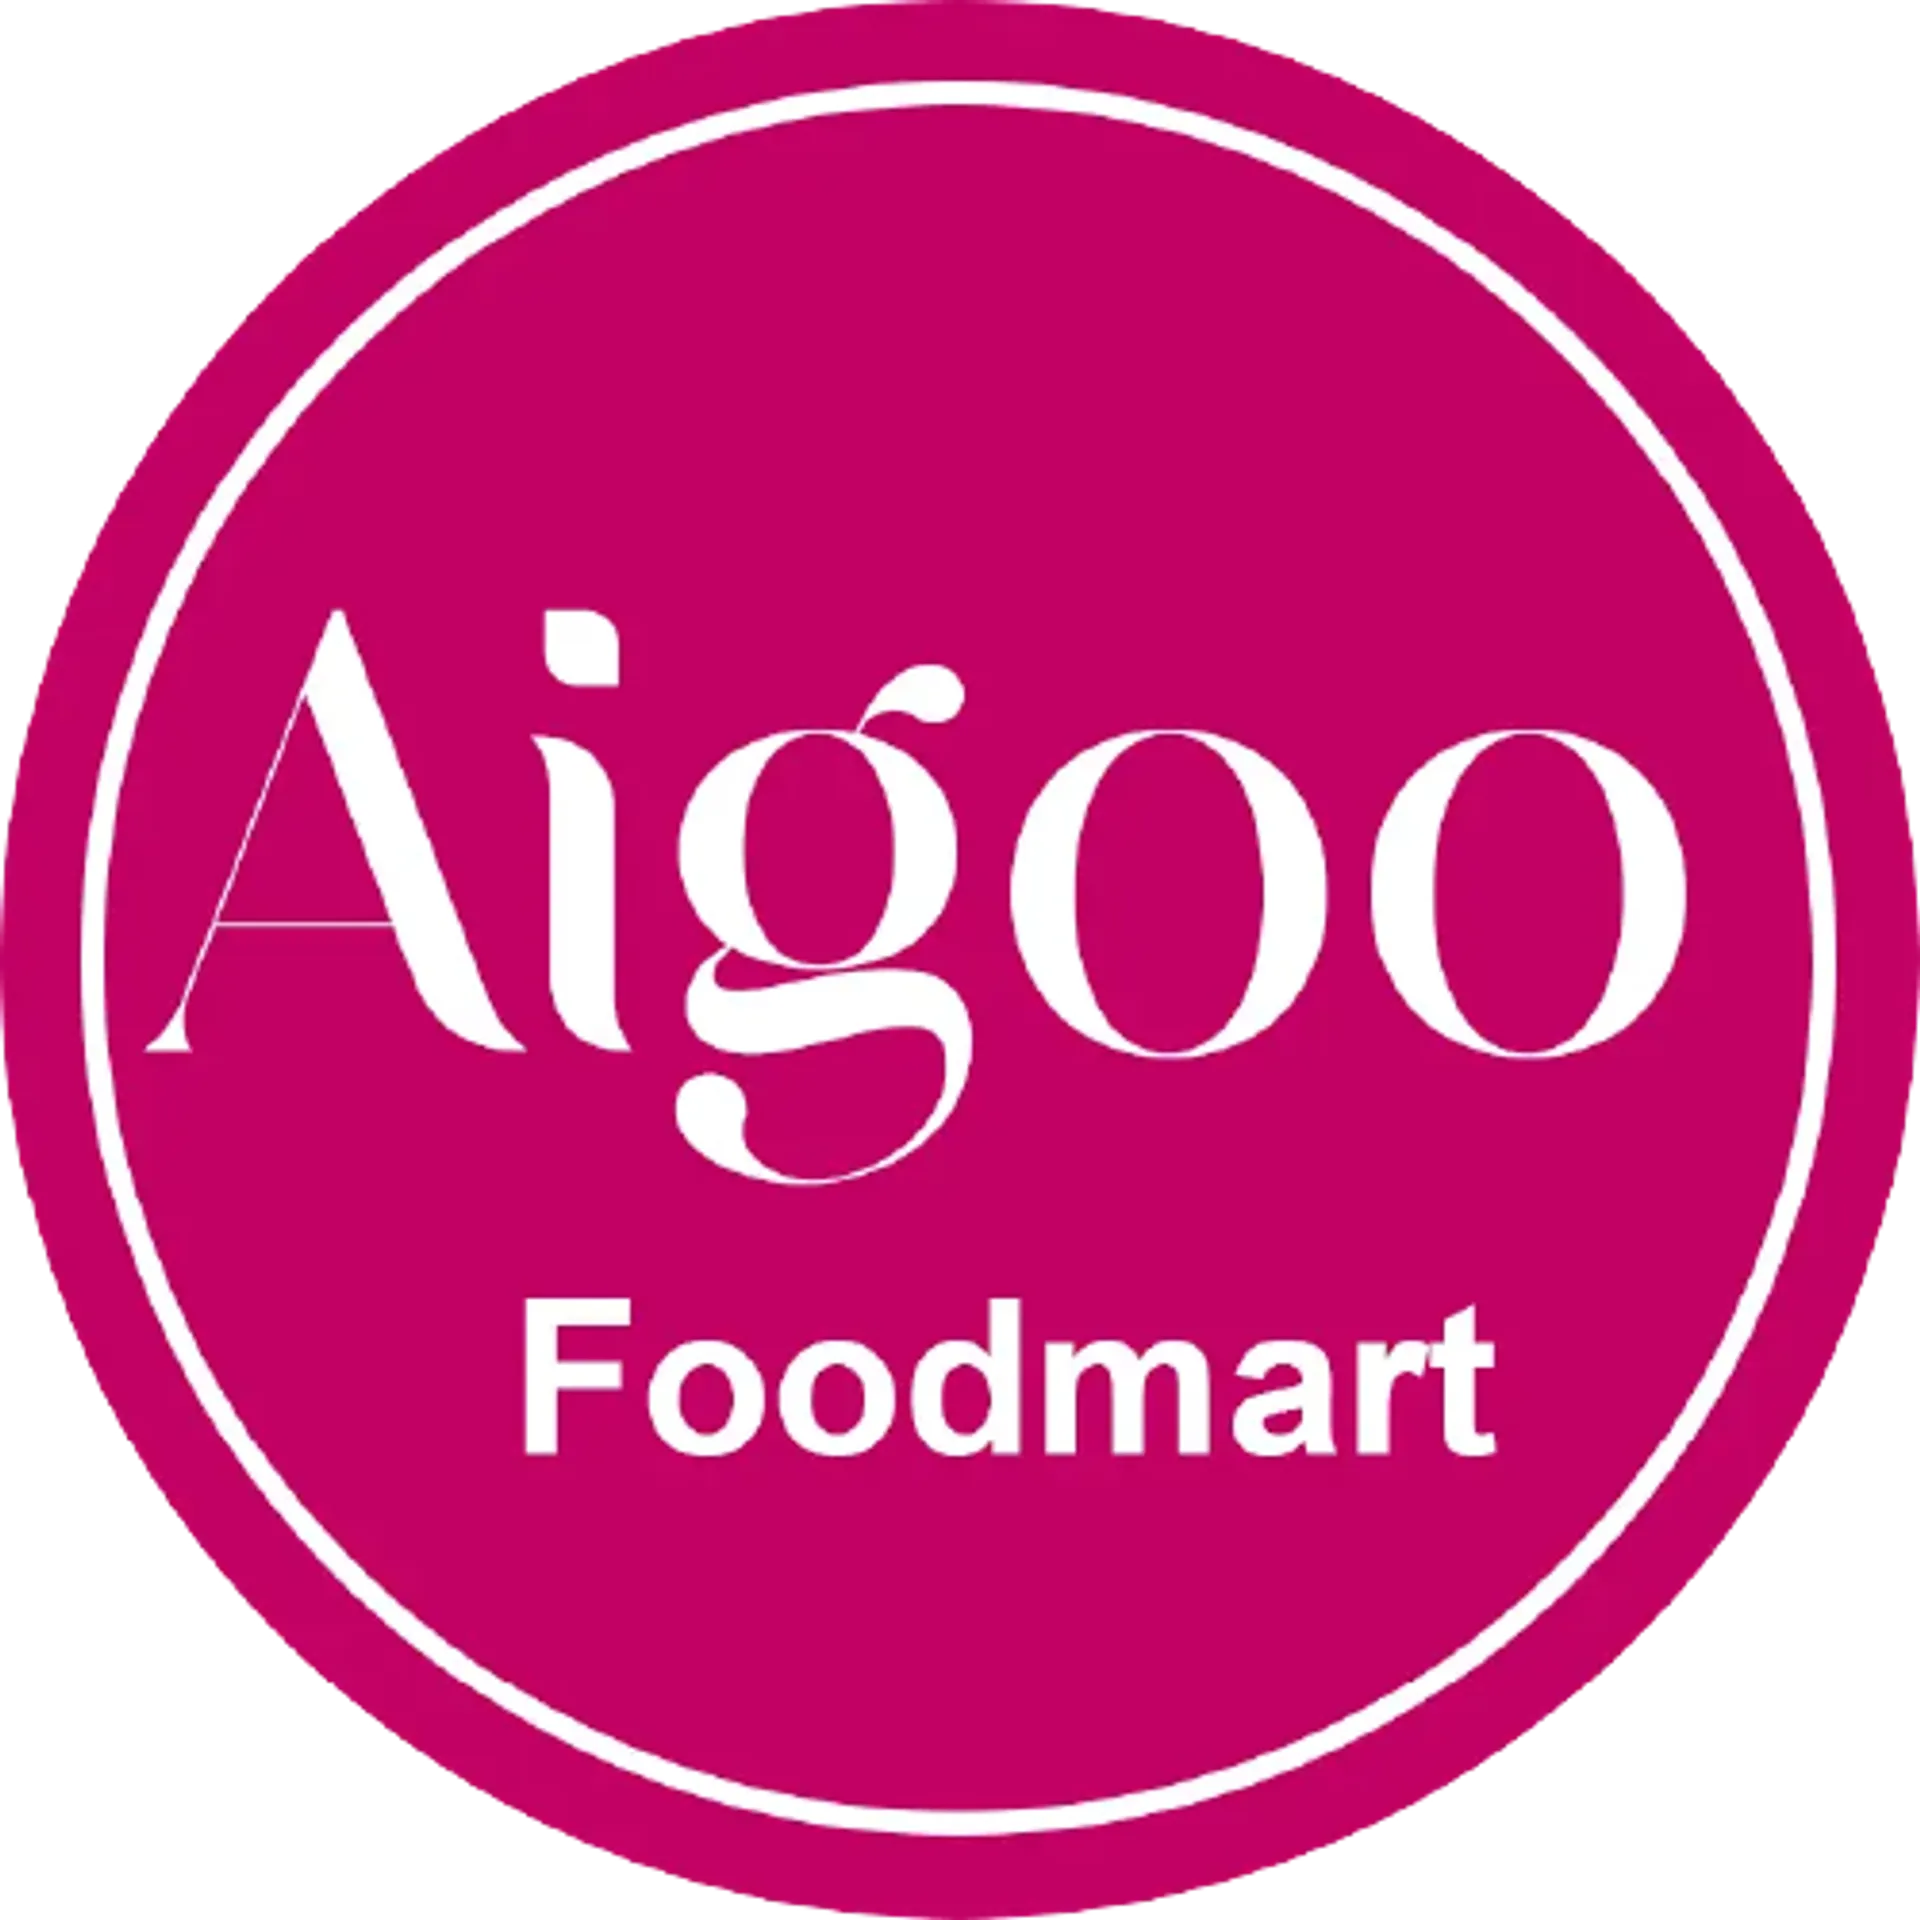 AIGOO FOODMART logo